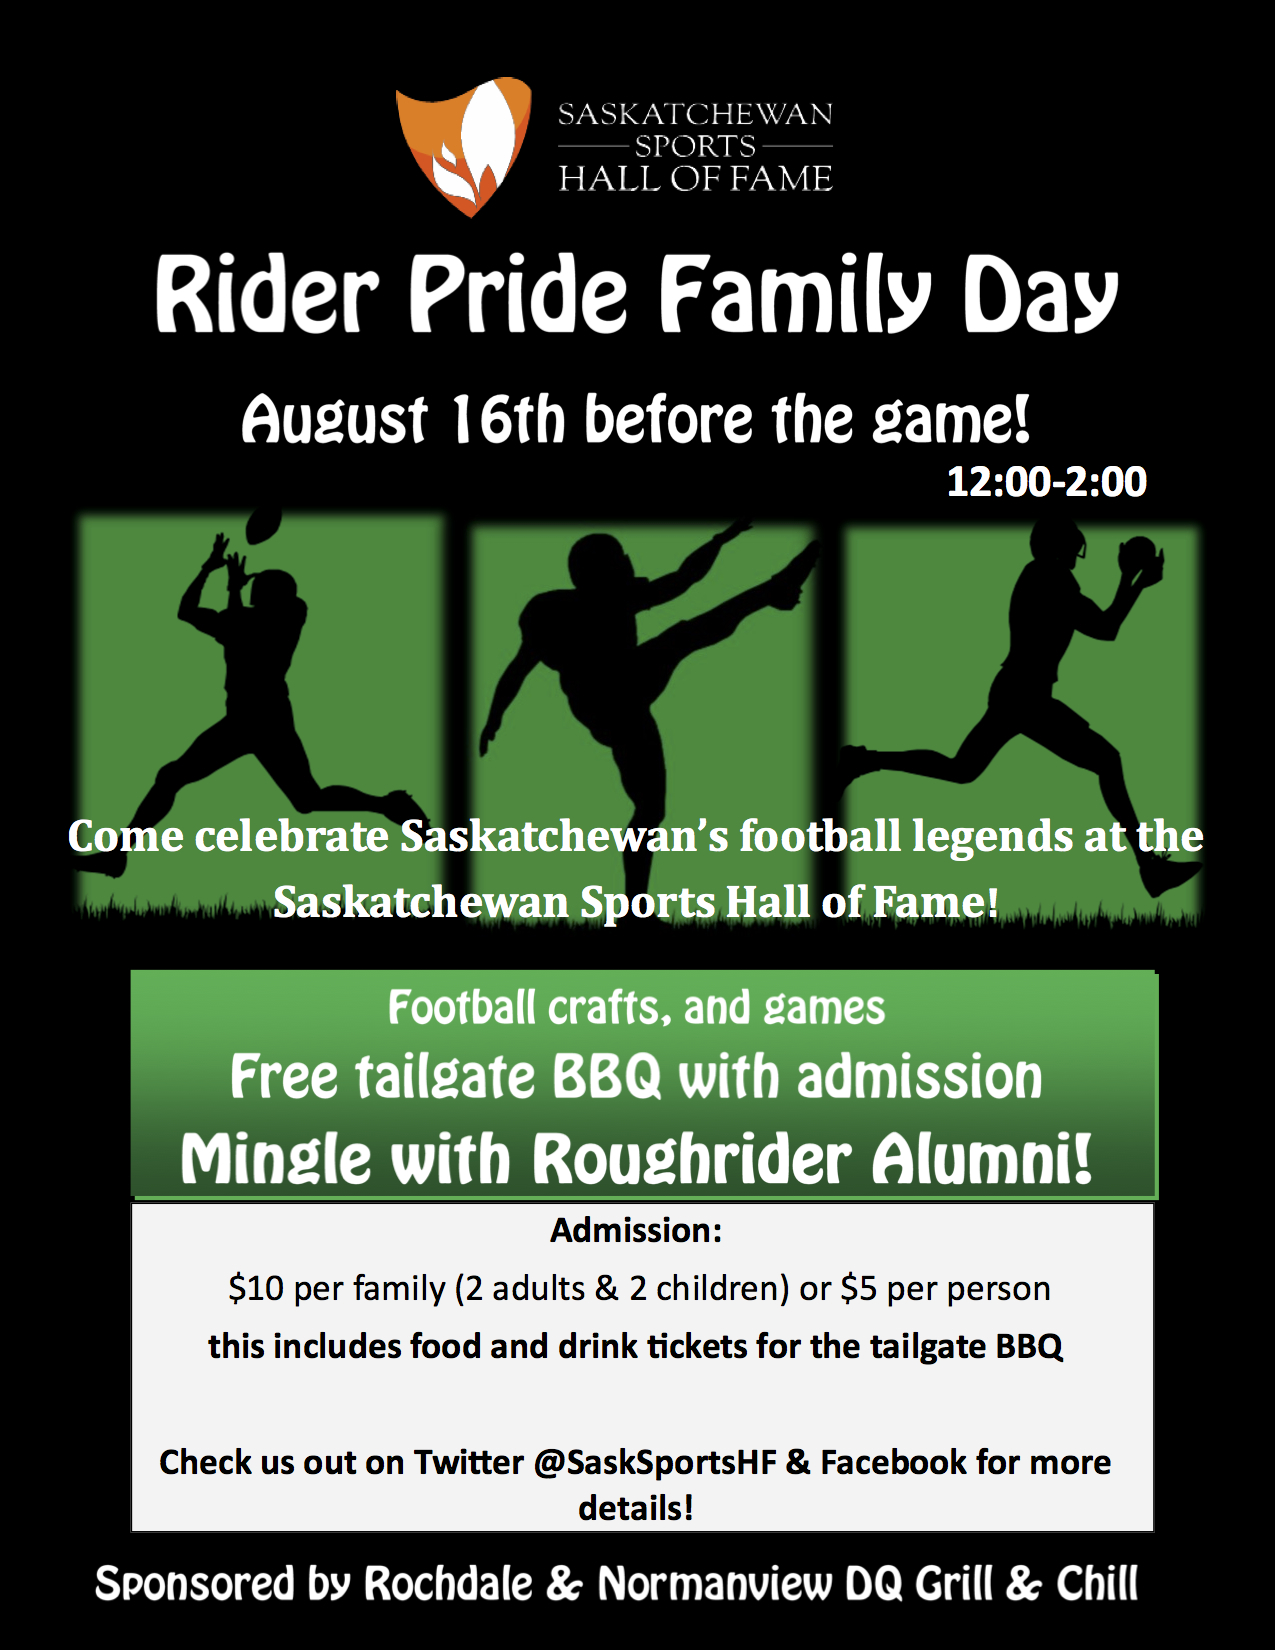 Rider Pride Family Day Saskatchewan Sports Hall of Fame